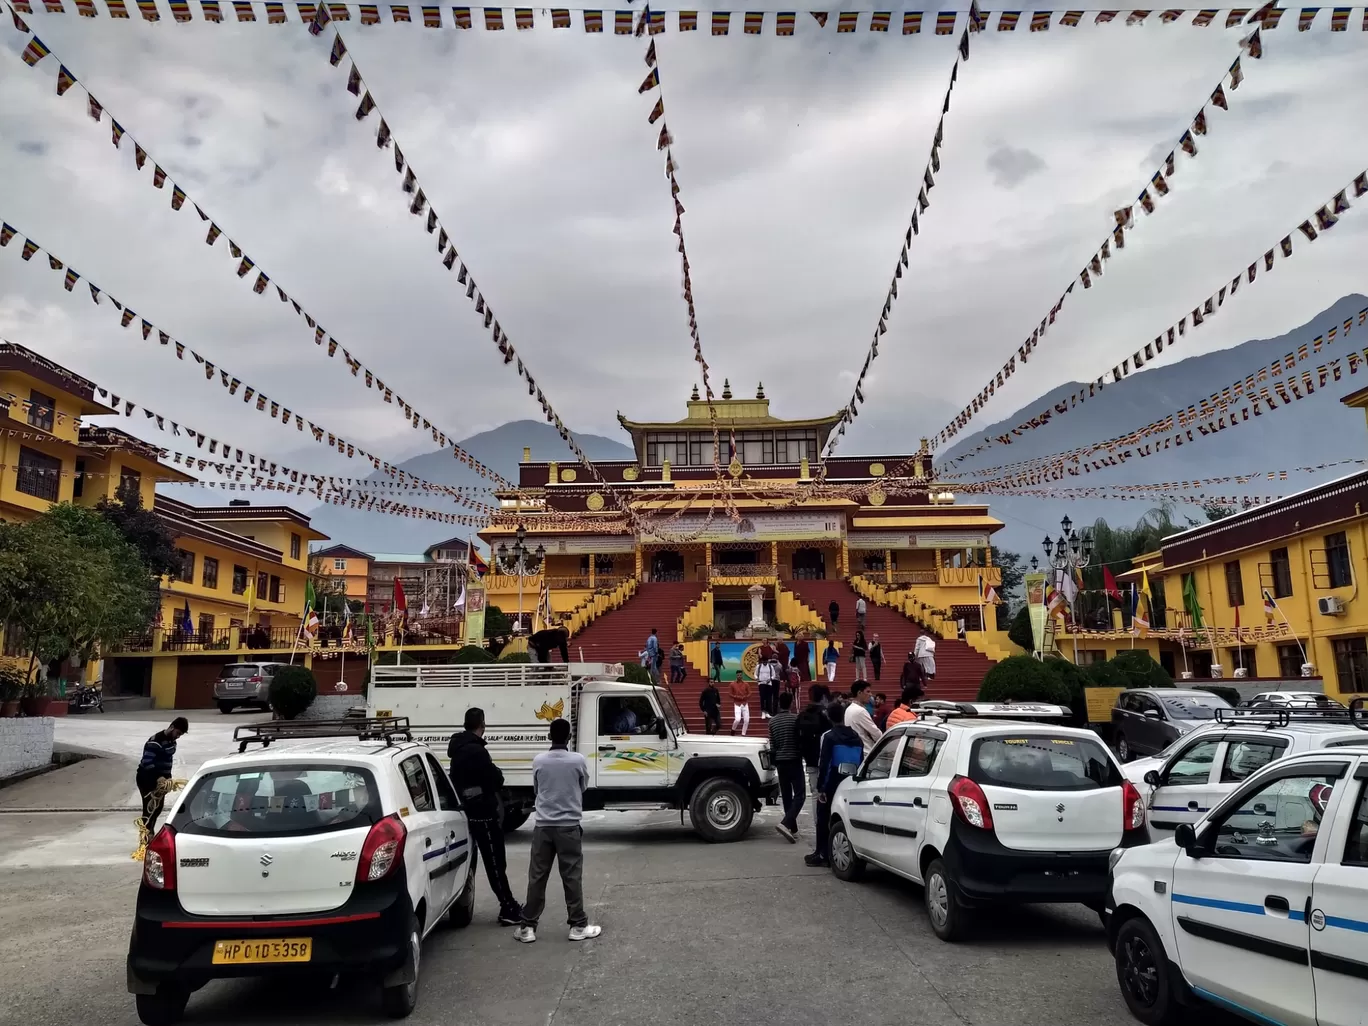 Photo of Gyuto Tantric Monastery Temple By Sahil Mankotia